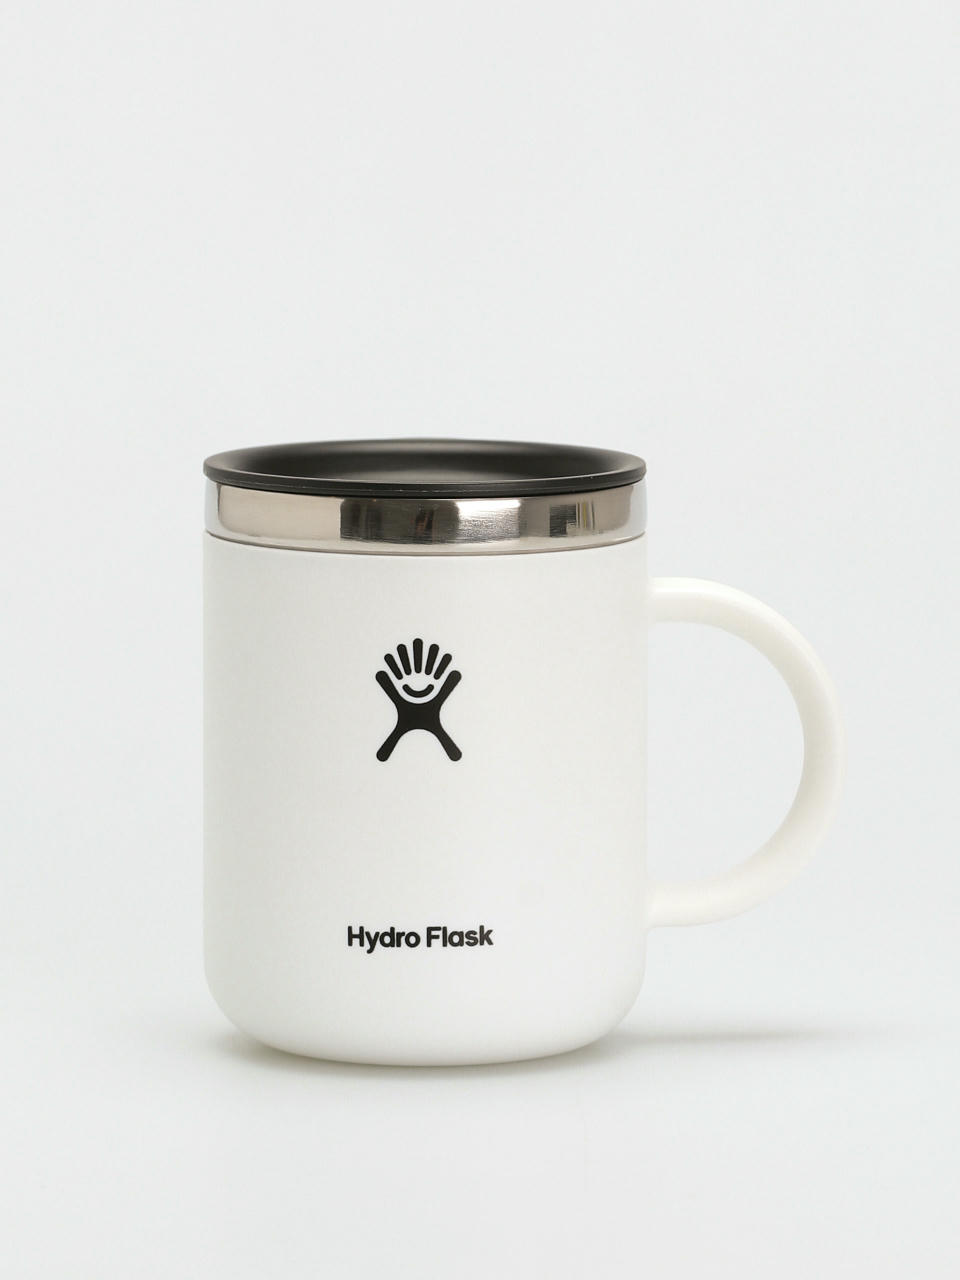 https://static.super-shop.com/1303909-hydro-flask-coffee-mug-354ml-white.jpg?w=960